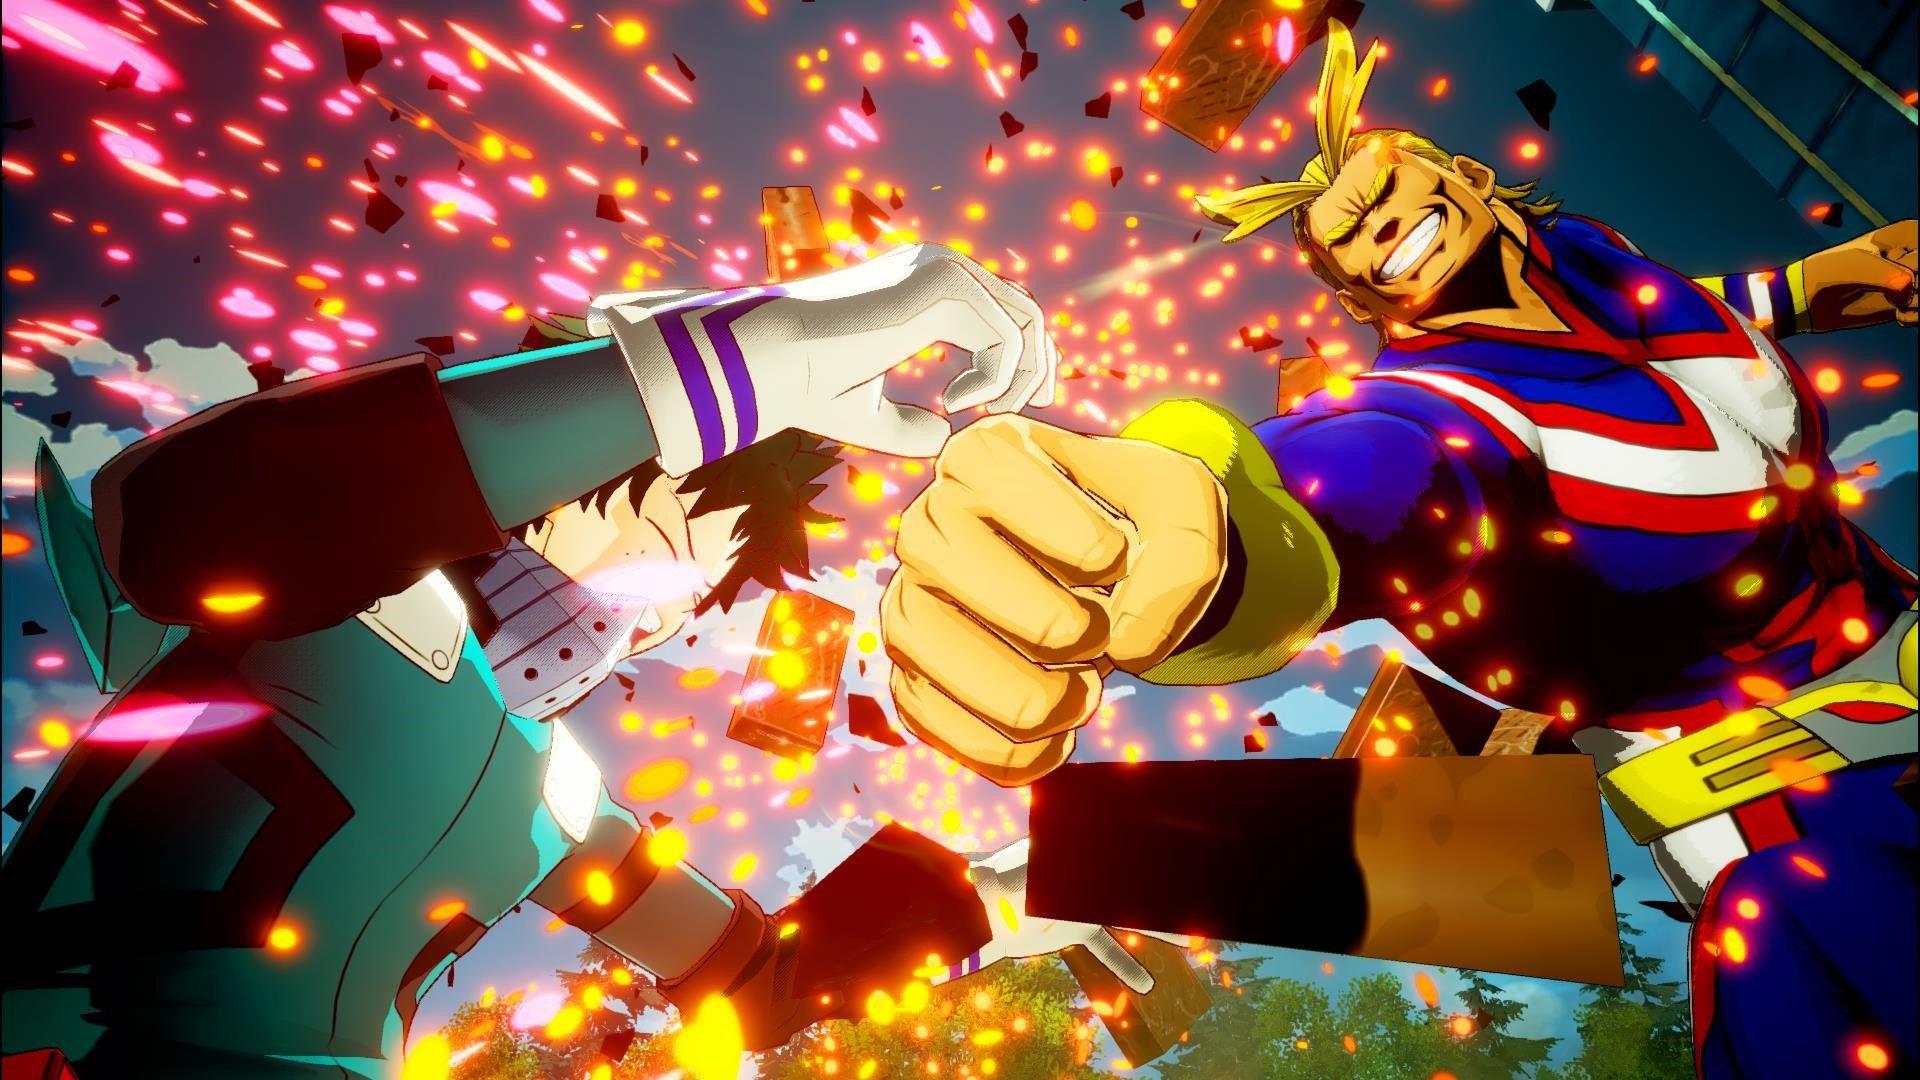 My Hero Academia: One's Justice screenshots show All Might, Katsuki